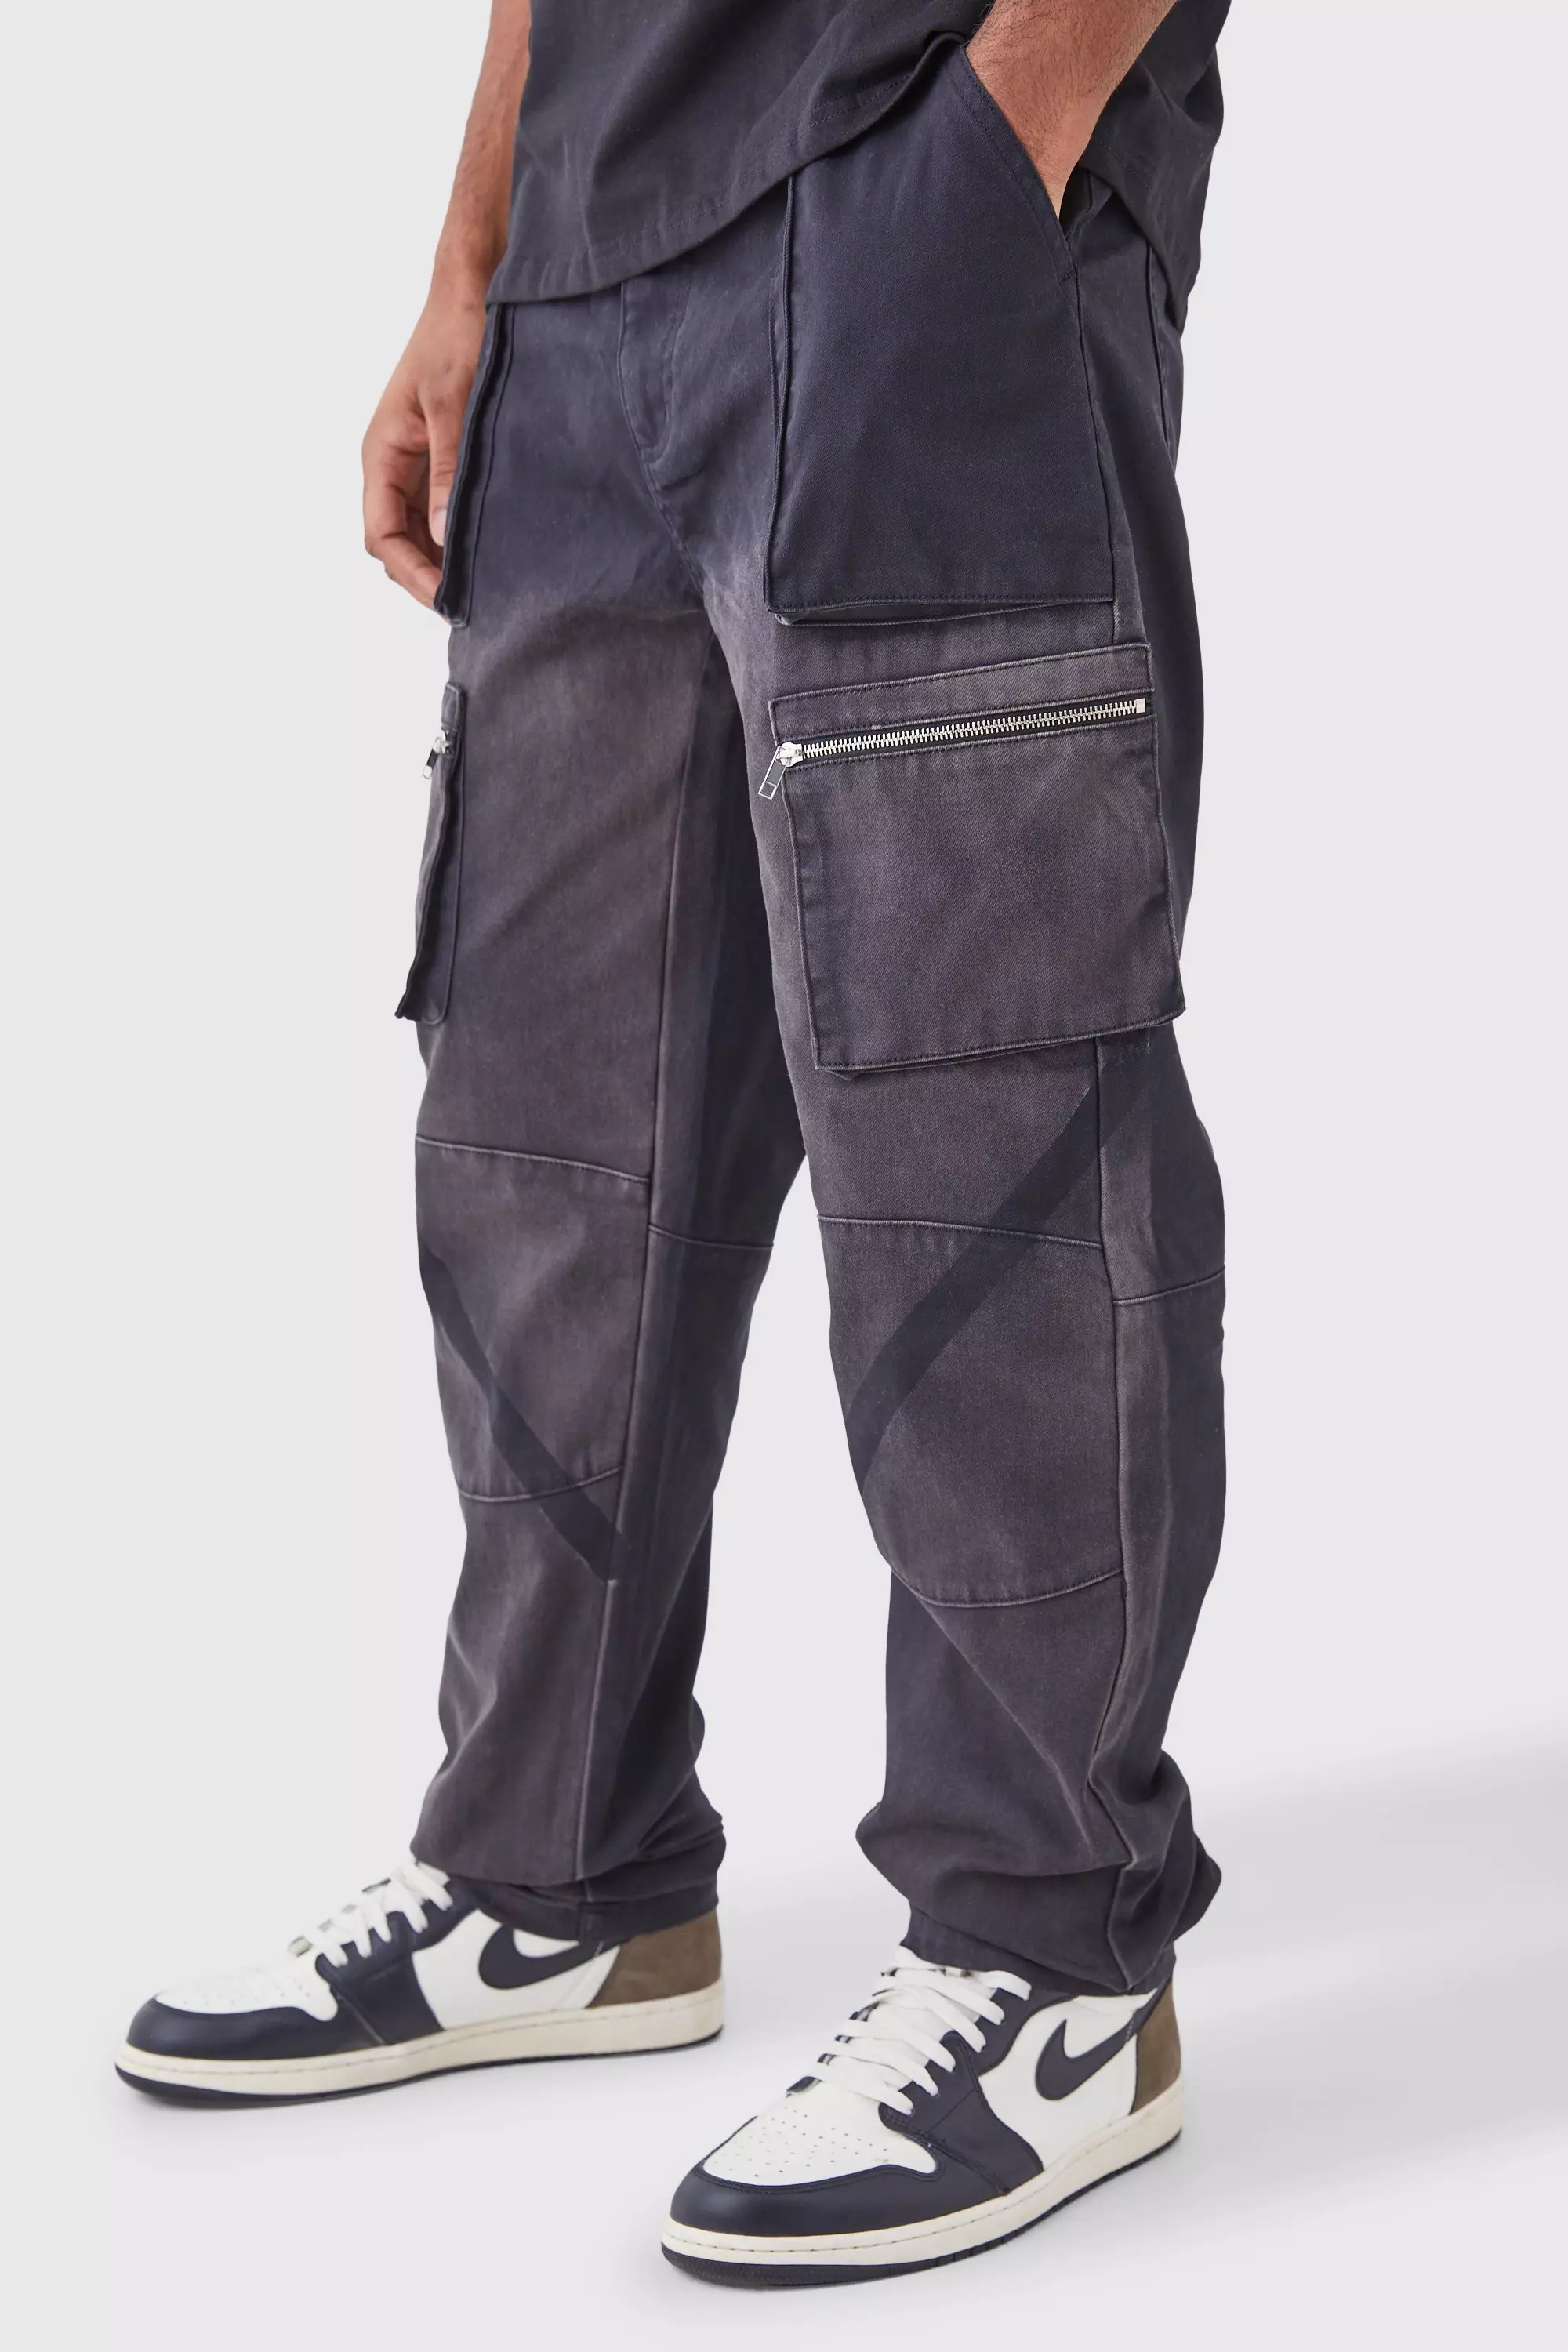 Ash Grey Tall Fixed Waist Stacked Straight Leg Overdye Cargo Trouser